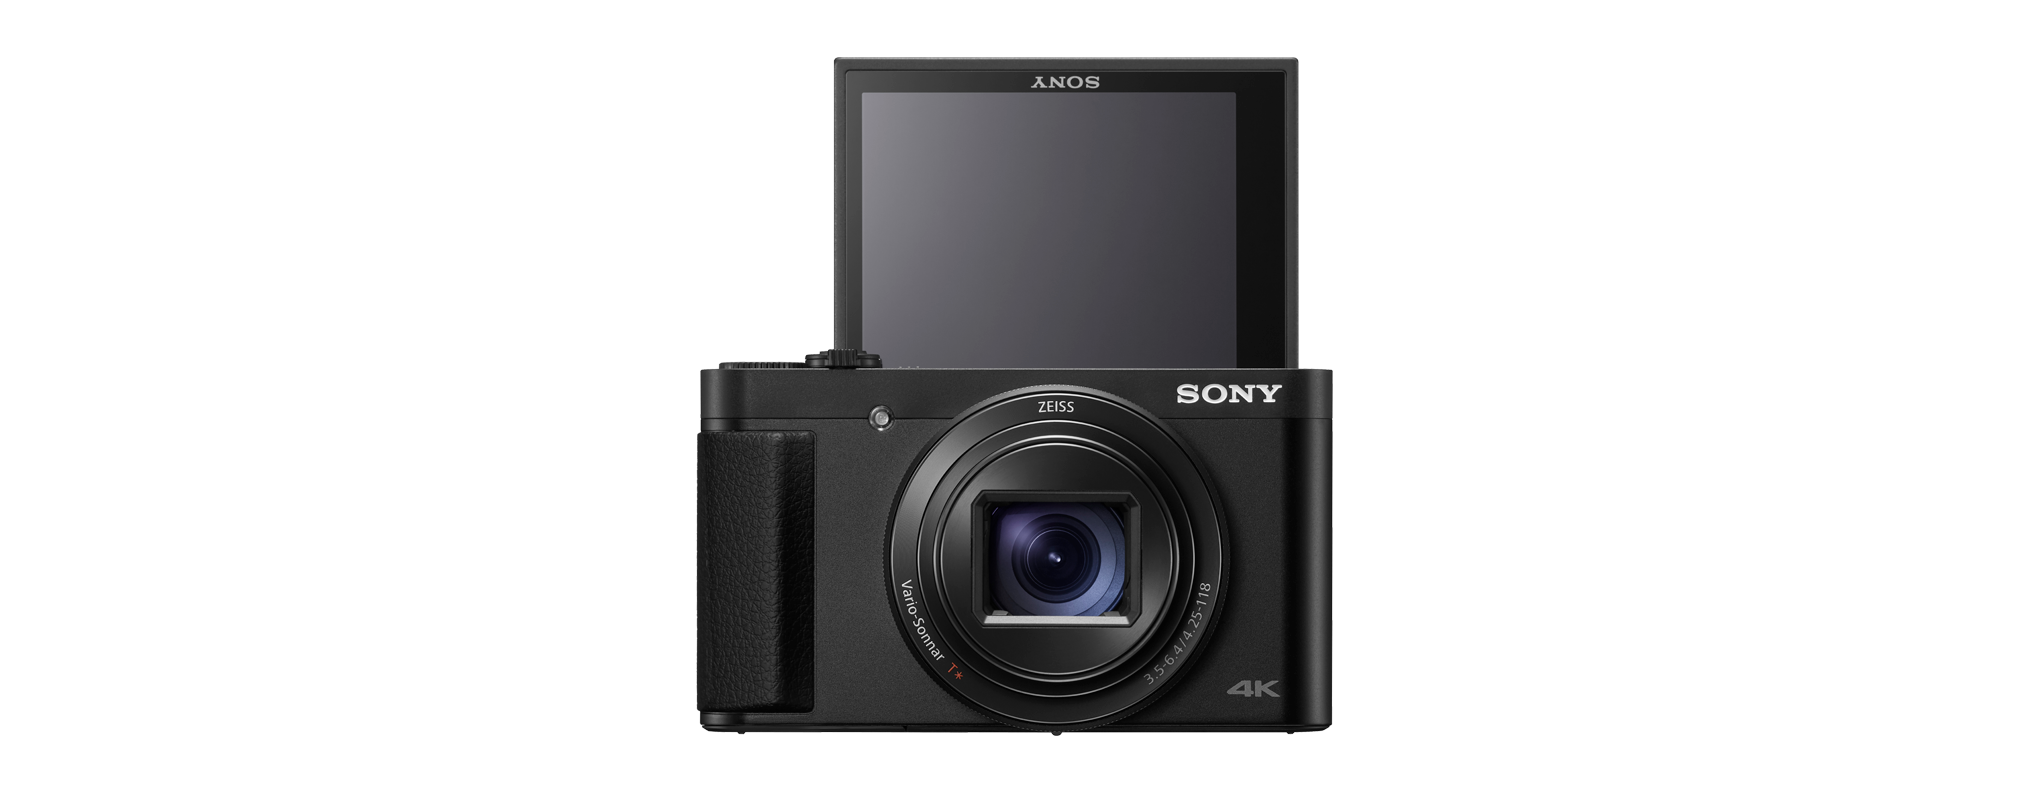 DSC-HX99 Fine, (Typ Schwarz, SONY TFT-LCD, , (4:3), Xtra 921.600 NFC Bildpunkte, 7.5 Zeiss Zoom, cm WLAN 28x Cyber-shot Digitalkamera 3) opt.